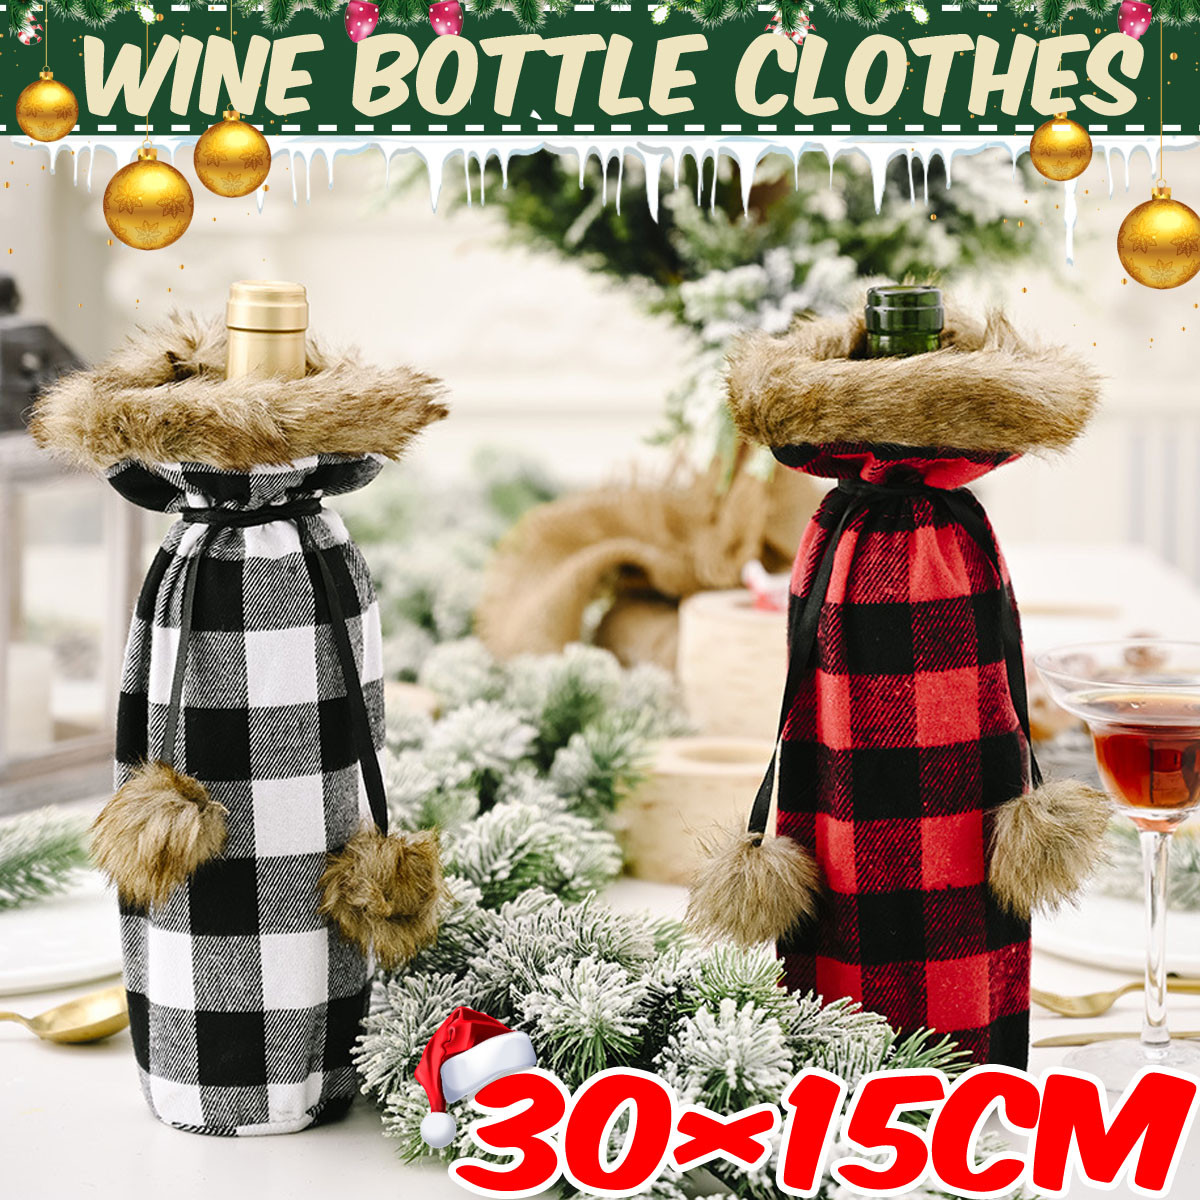 Christmas-Sweater-Winee-Bottle-Clothes-Collar--Button-Coat-Design-Decorative-Bottle-Sleeve-Winee-Bot-1720509-2